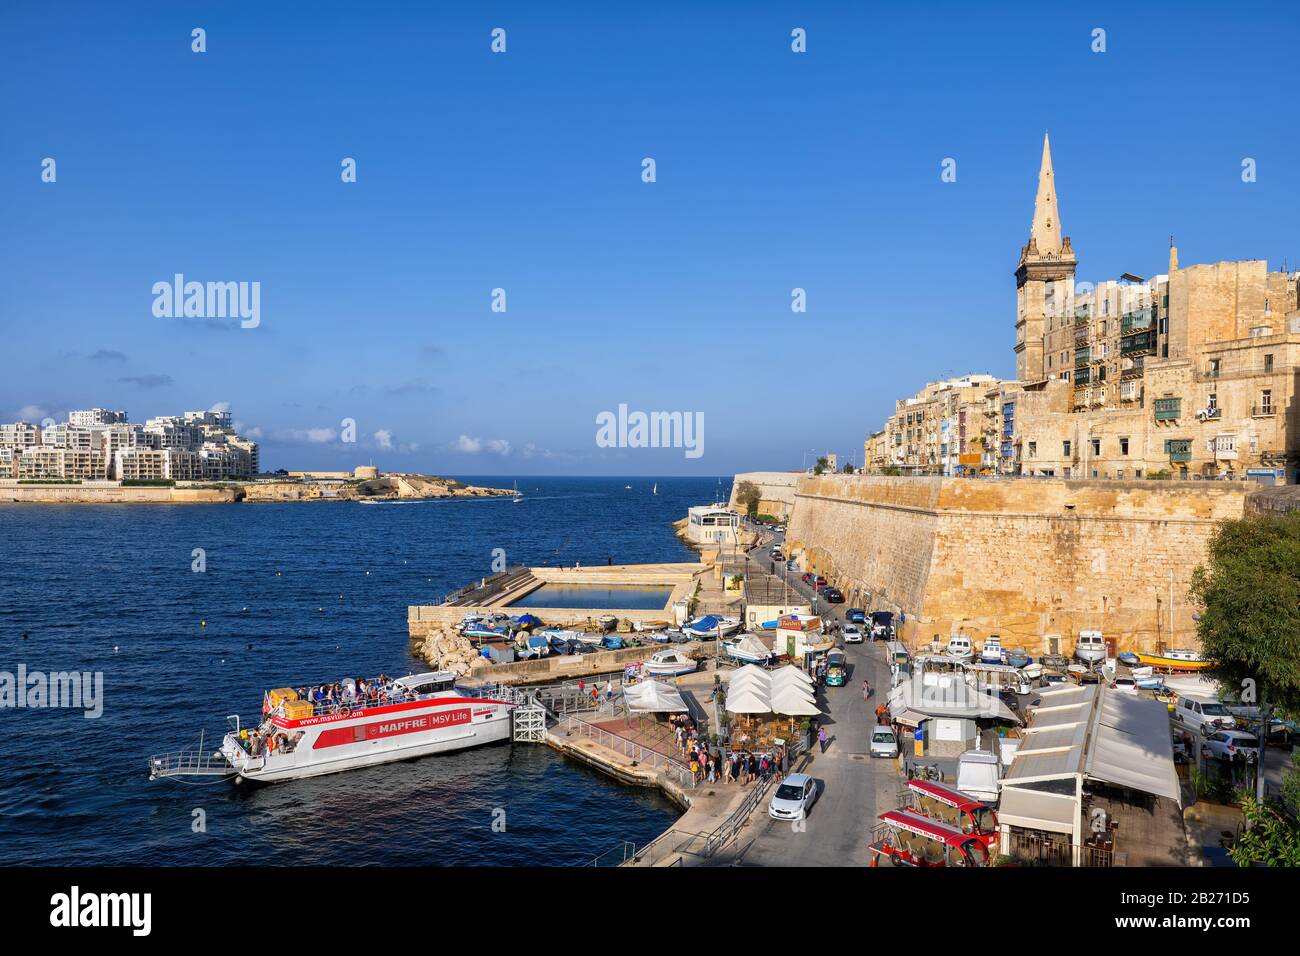 Old city of Valletta in Malta, VFS ferry boat between Valletta and Sliema in Marsamxett Harbour in the Mediterranean Sea Stock Photo